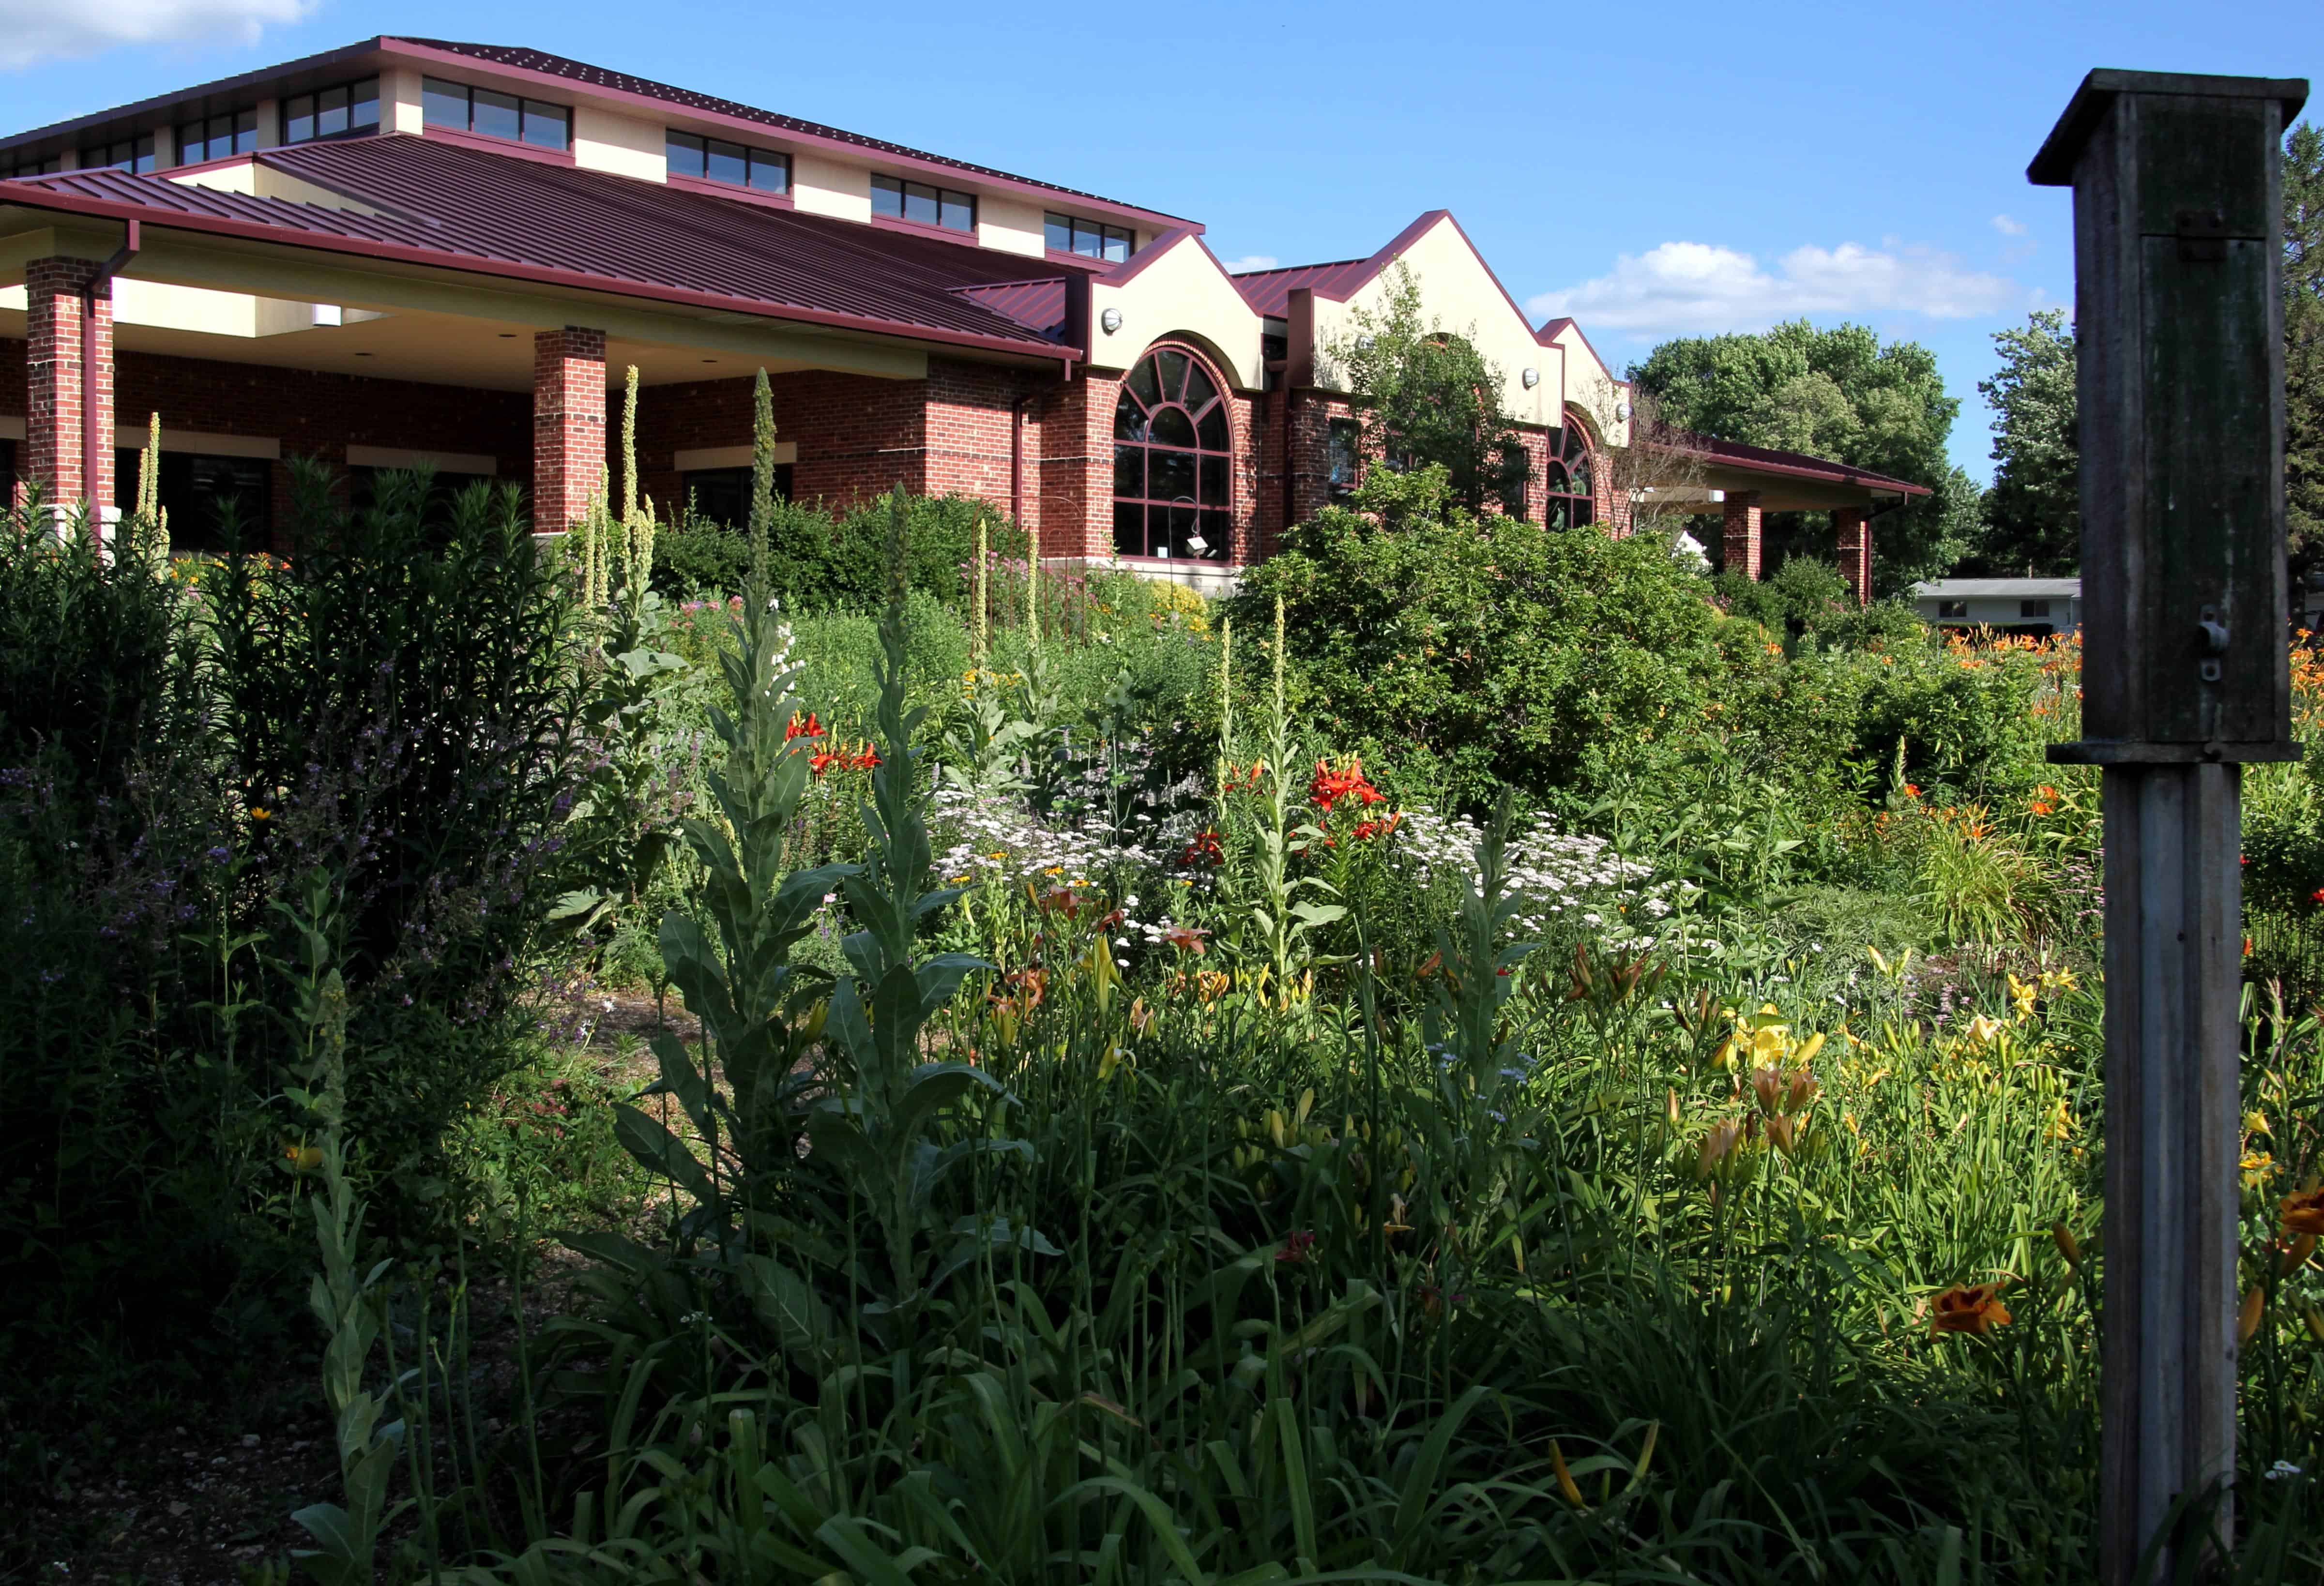 Library Building through Butterfly Garden